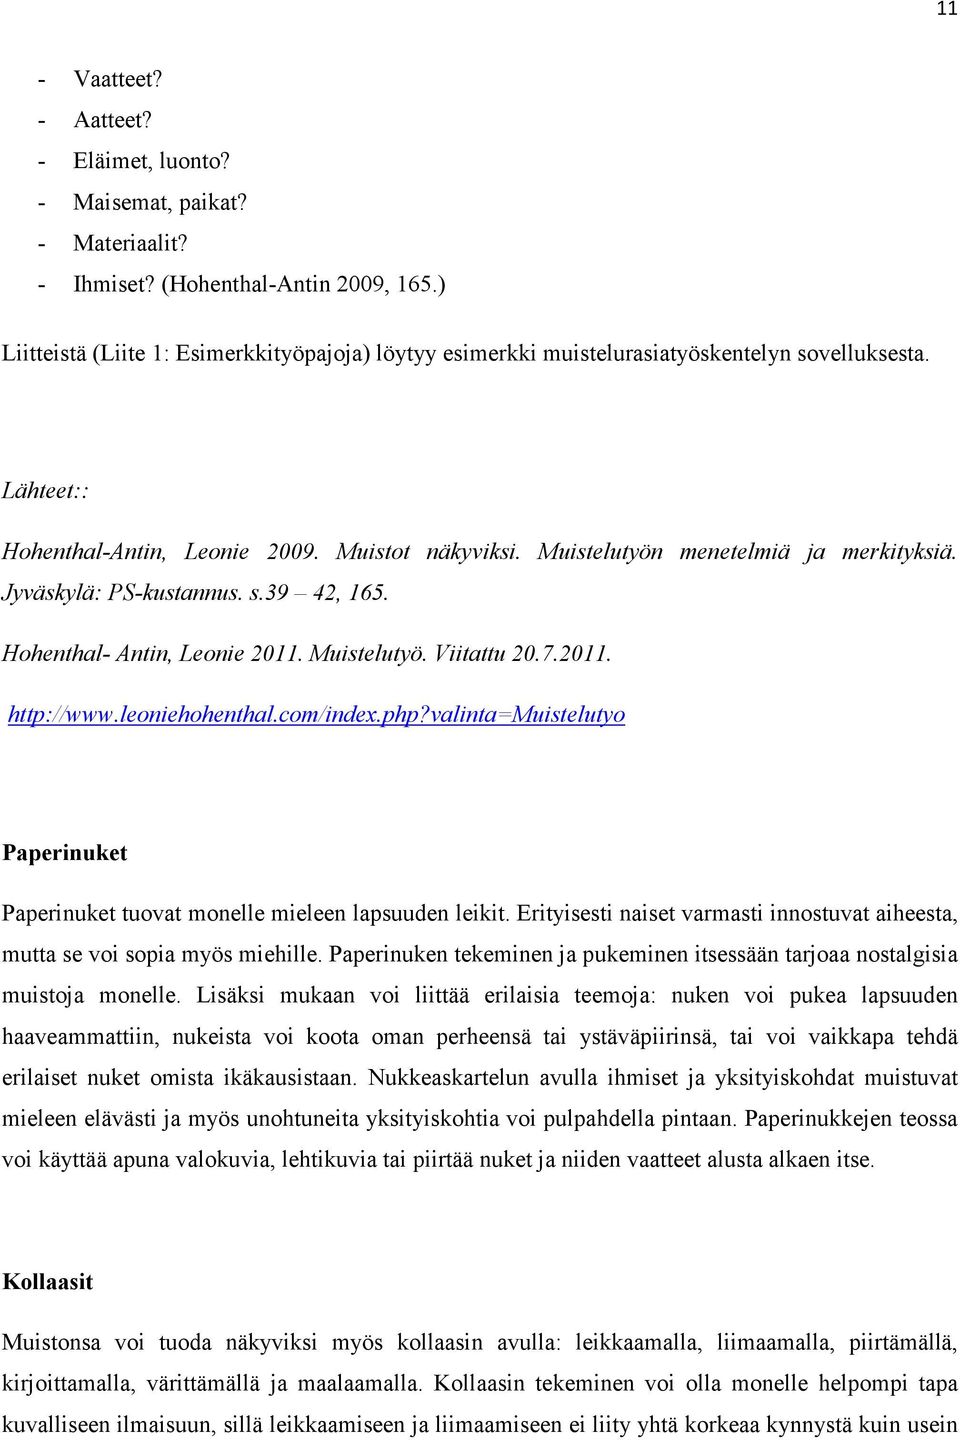 Jyväskylä: PS-kustannus. s.39 42, 165. Hohenthal- Antin, Leonie 2011. Muistelutyö. Viitattu 20.7.2011. http://www.leoniehohenthal.com/index.php?